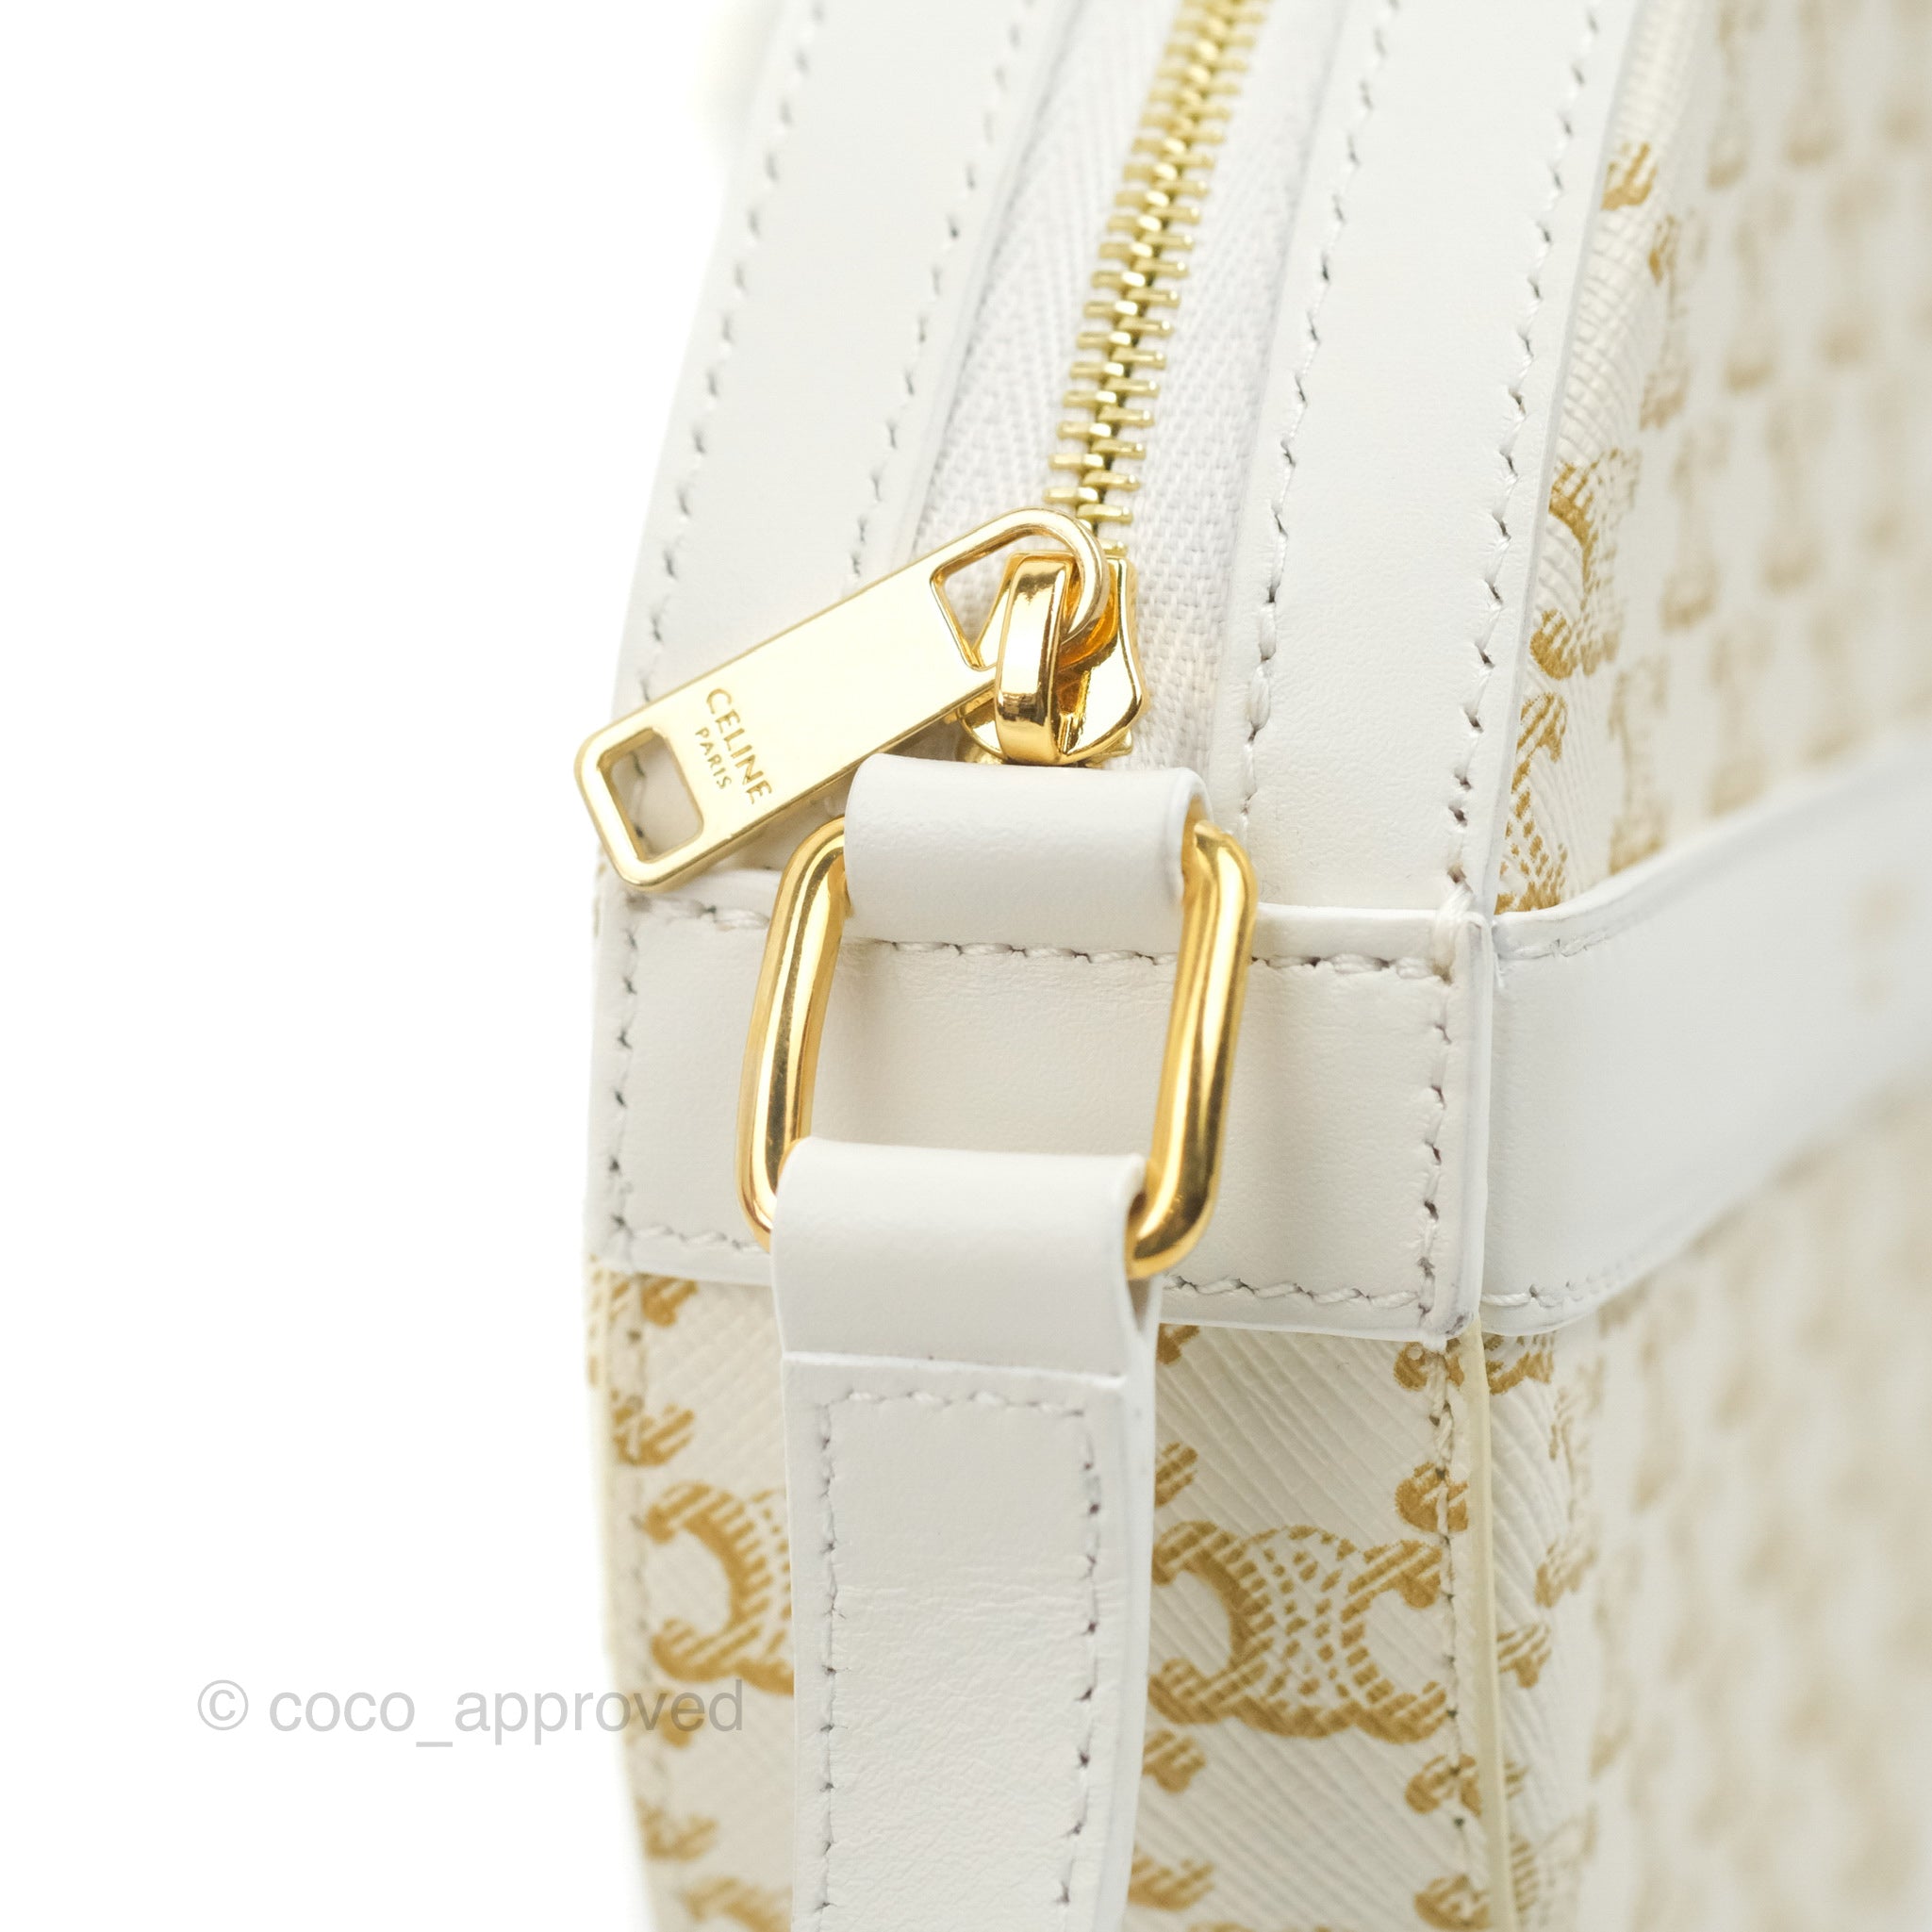 Celine Triomphe Belt & Handbag, Wallet on chain WOC